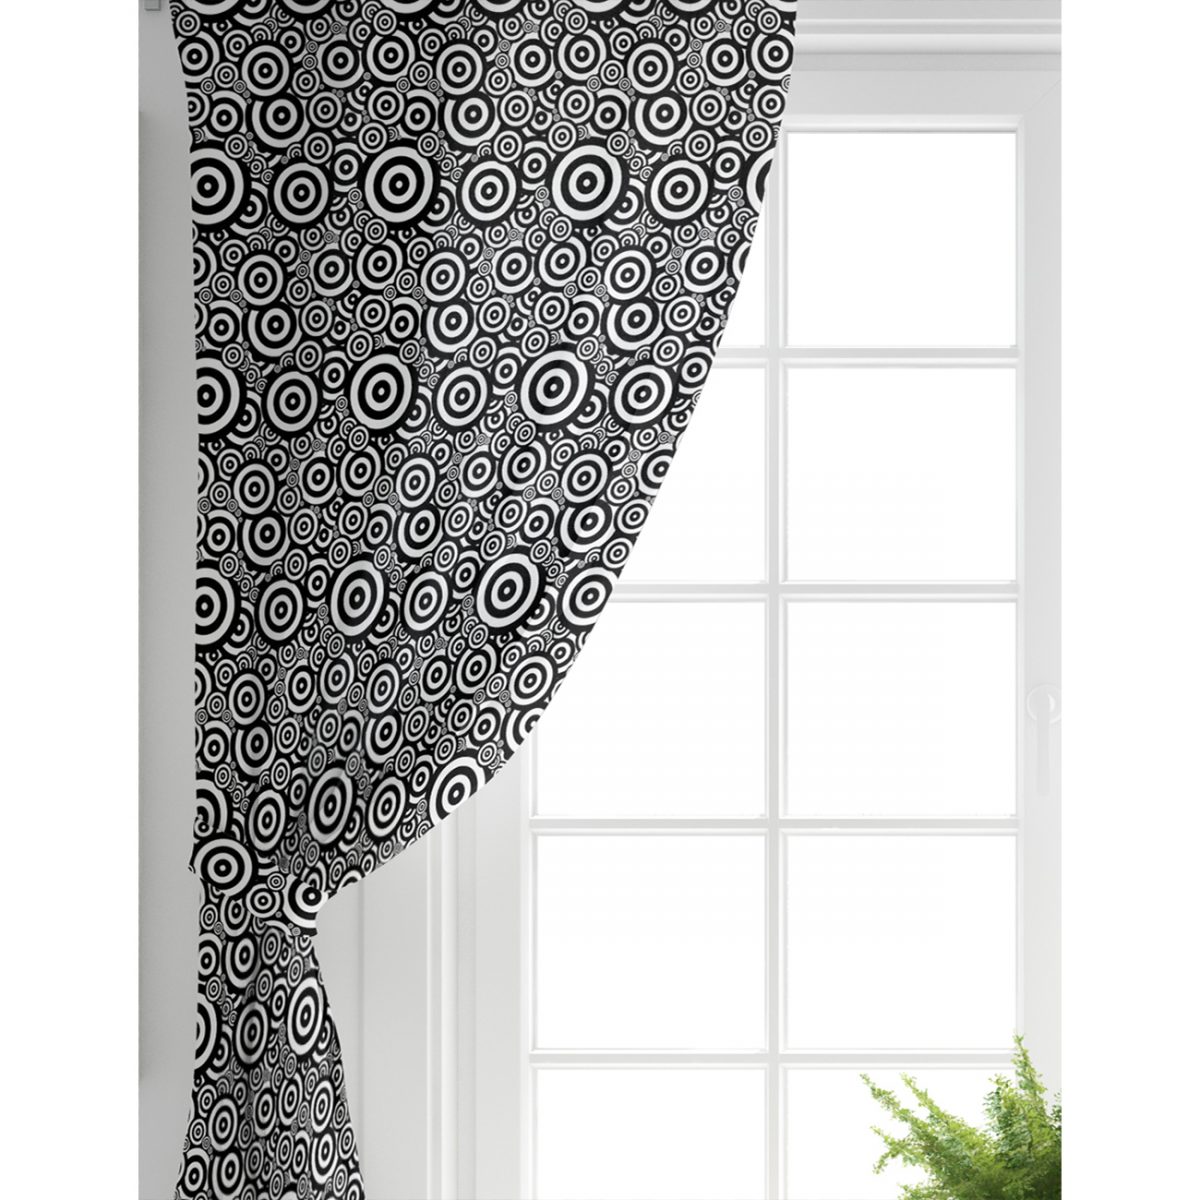 Siyah Beyaz Geometrik Yuvarlak Tasarımlı Modern Salon Fon Perde Realhomes